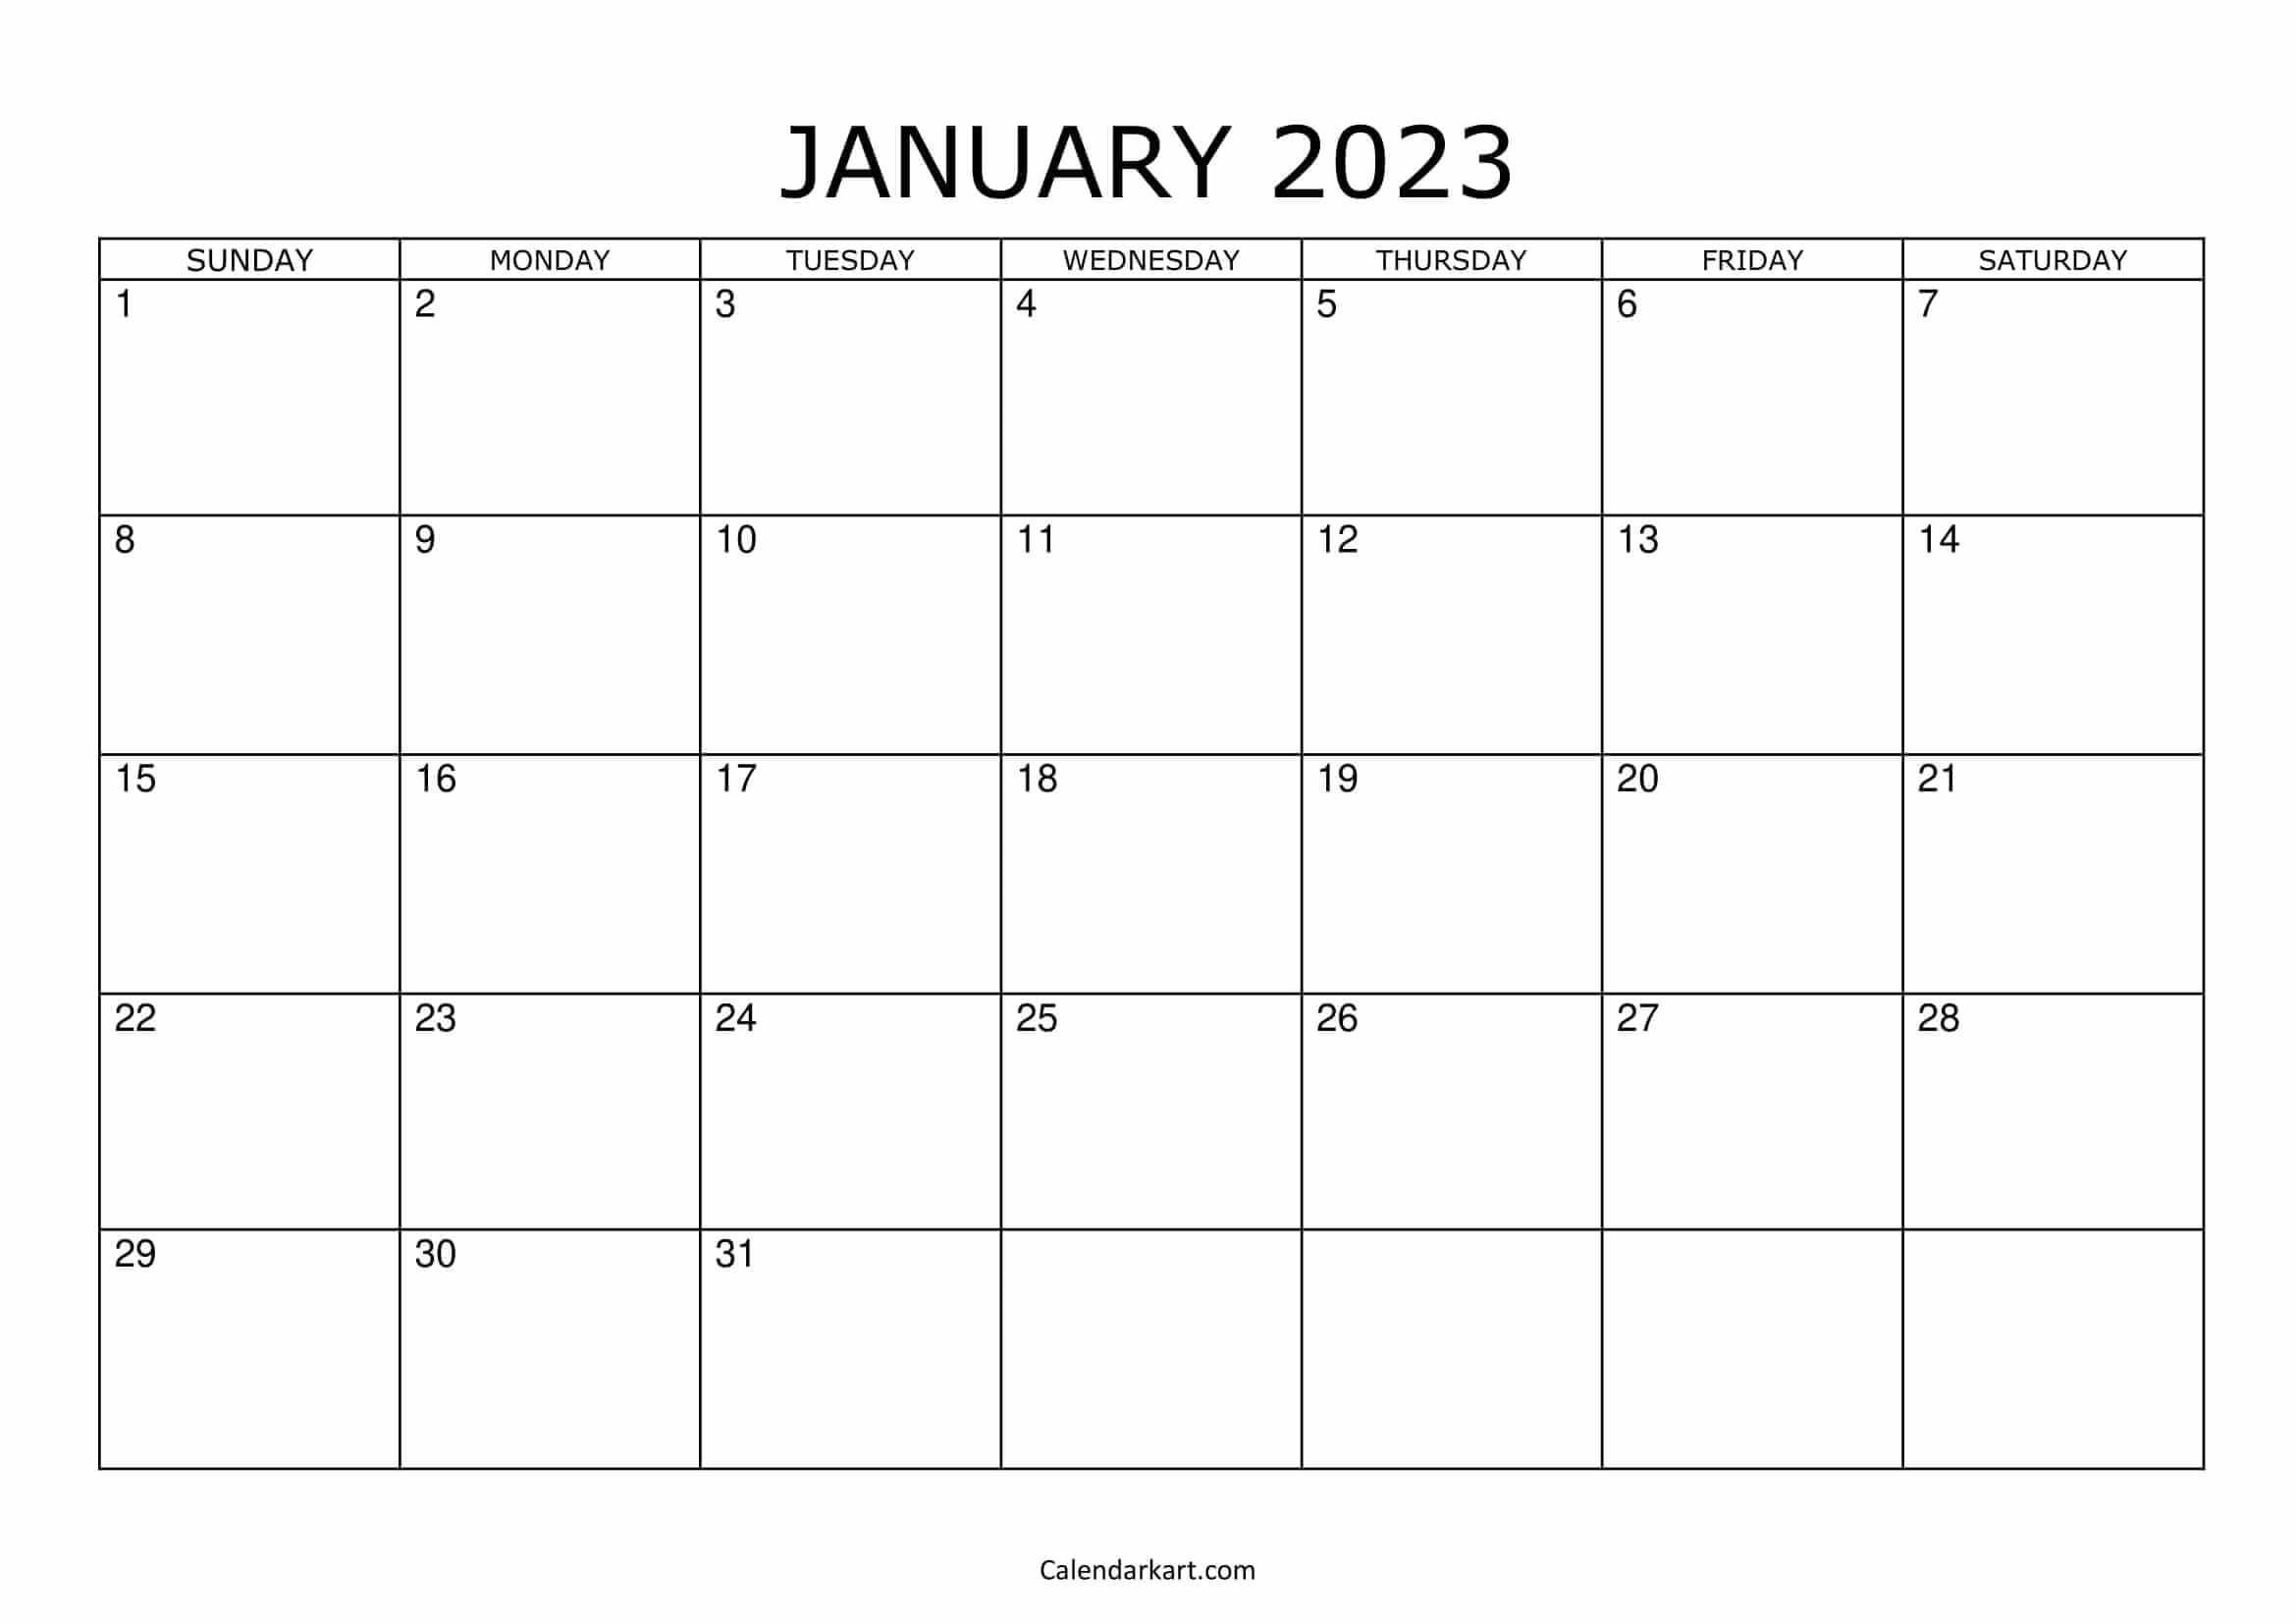 Free Printable Calendar 2023